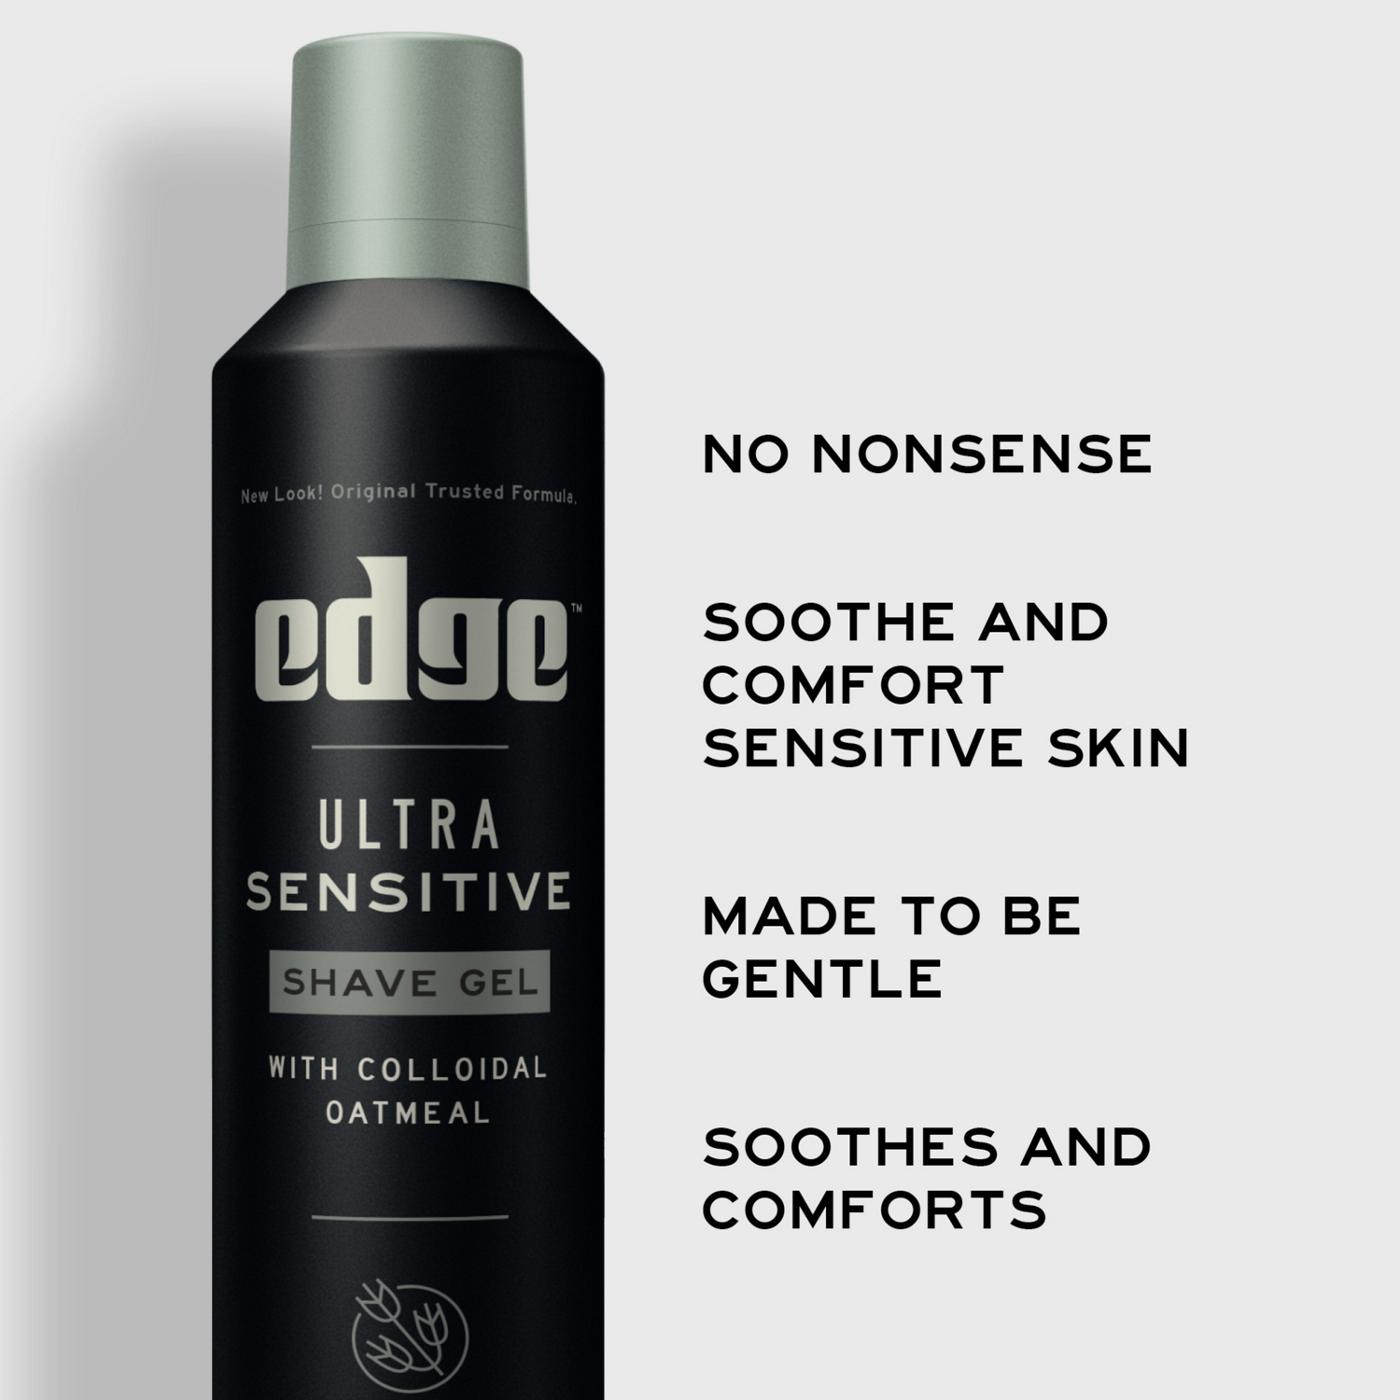 Edge Sensitive skin shave gel with aloe